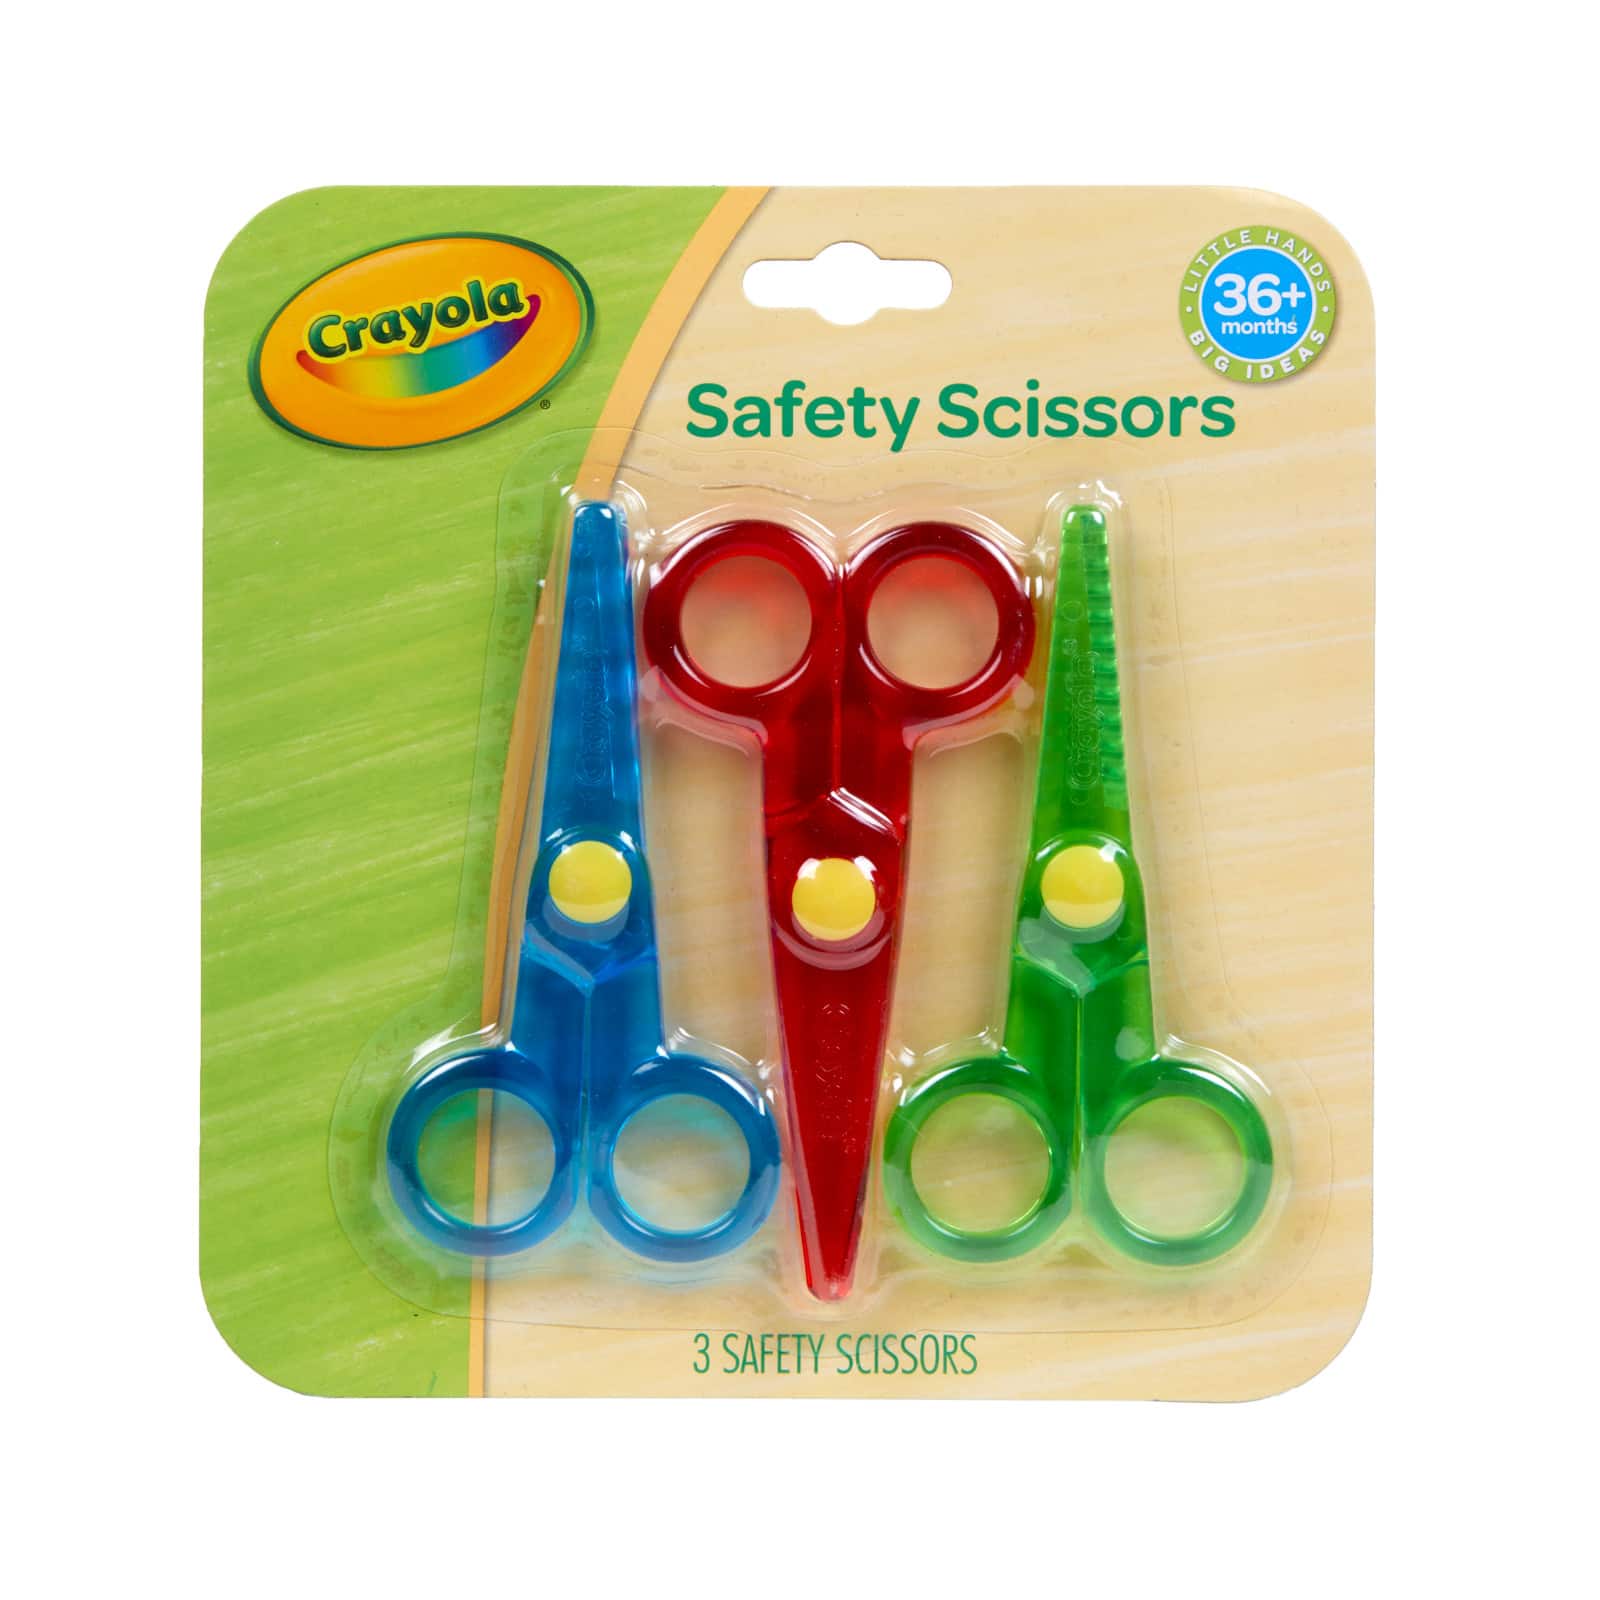 Fiskars 5 Inch Pointed Tip Kids Scissors Classroom Pack Caddy